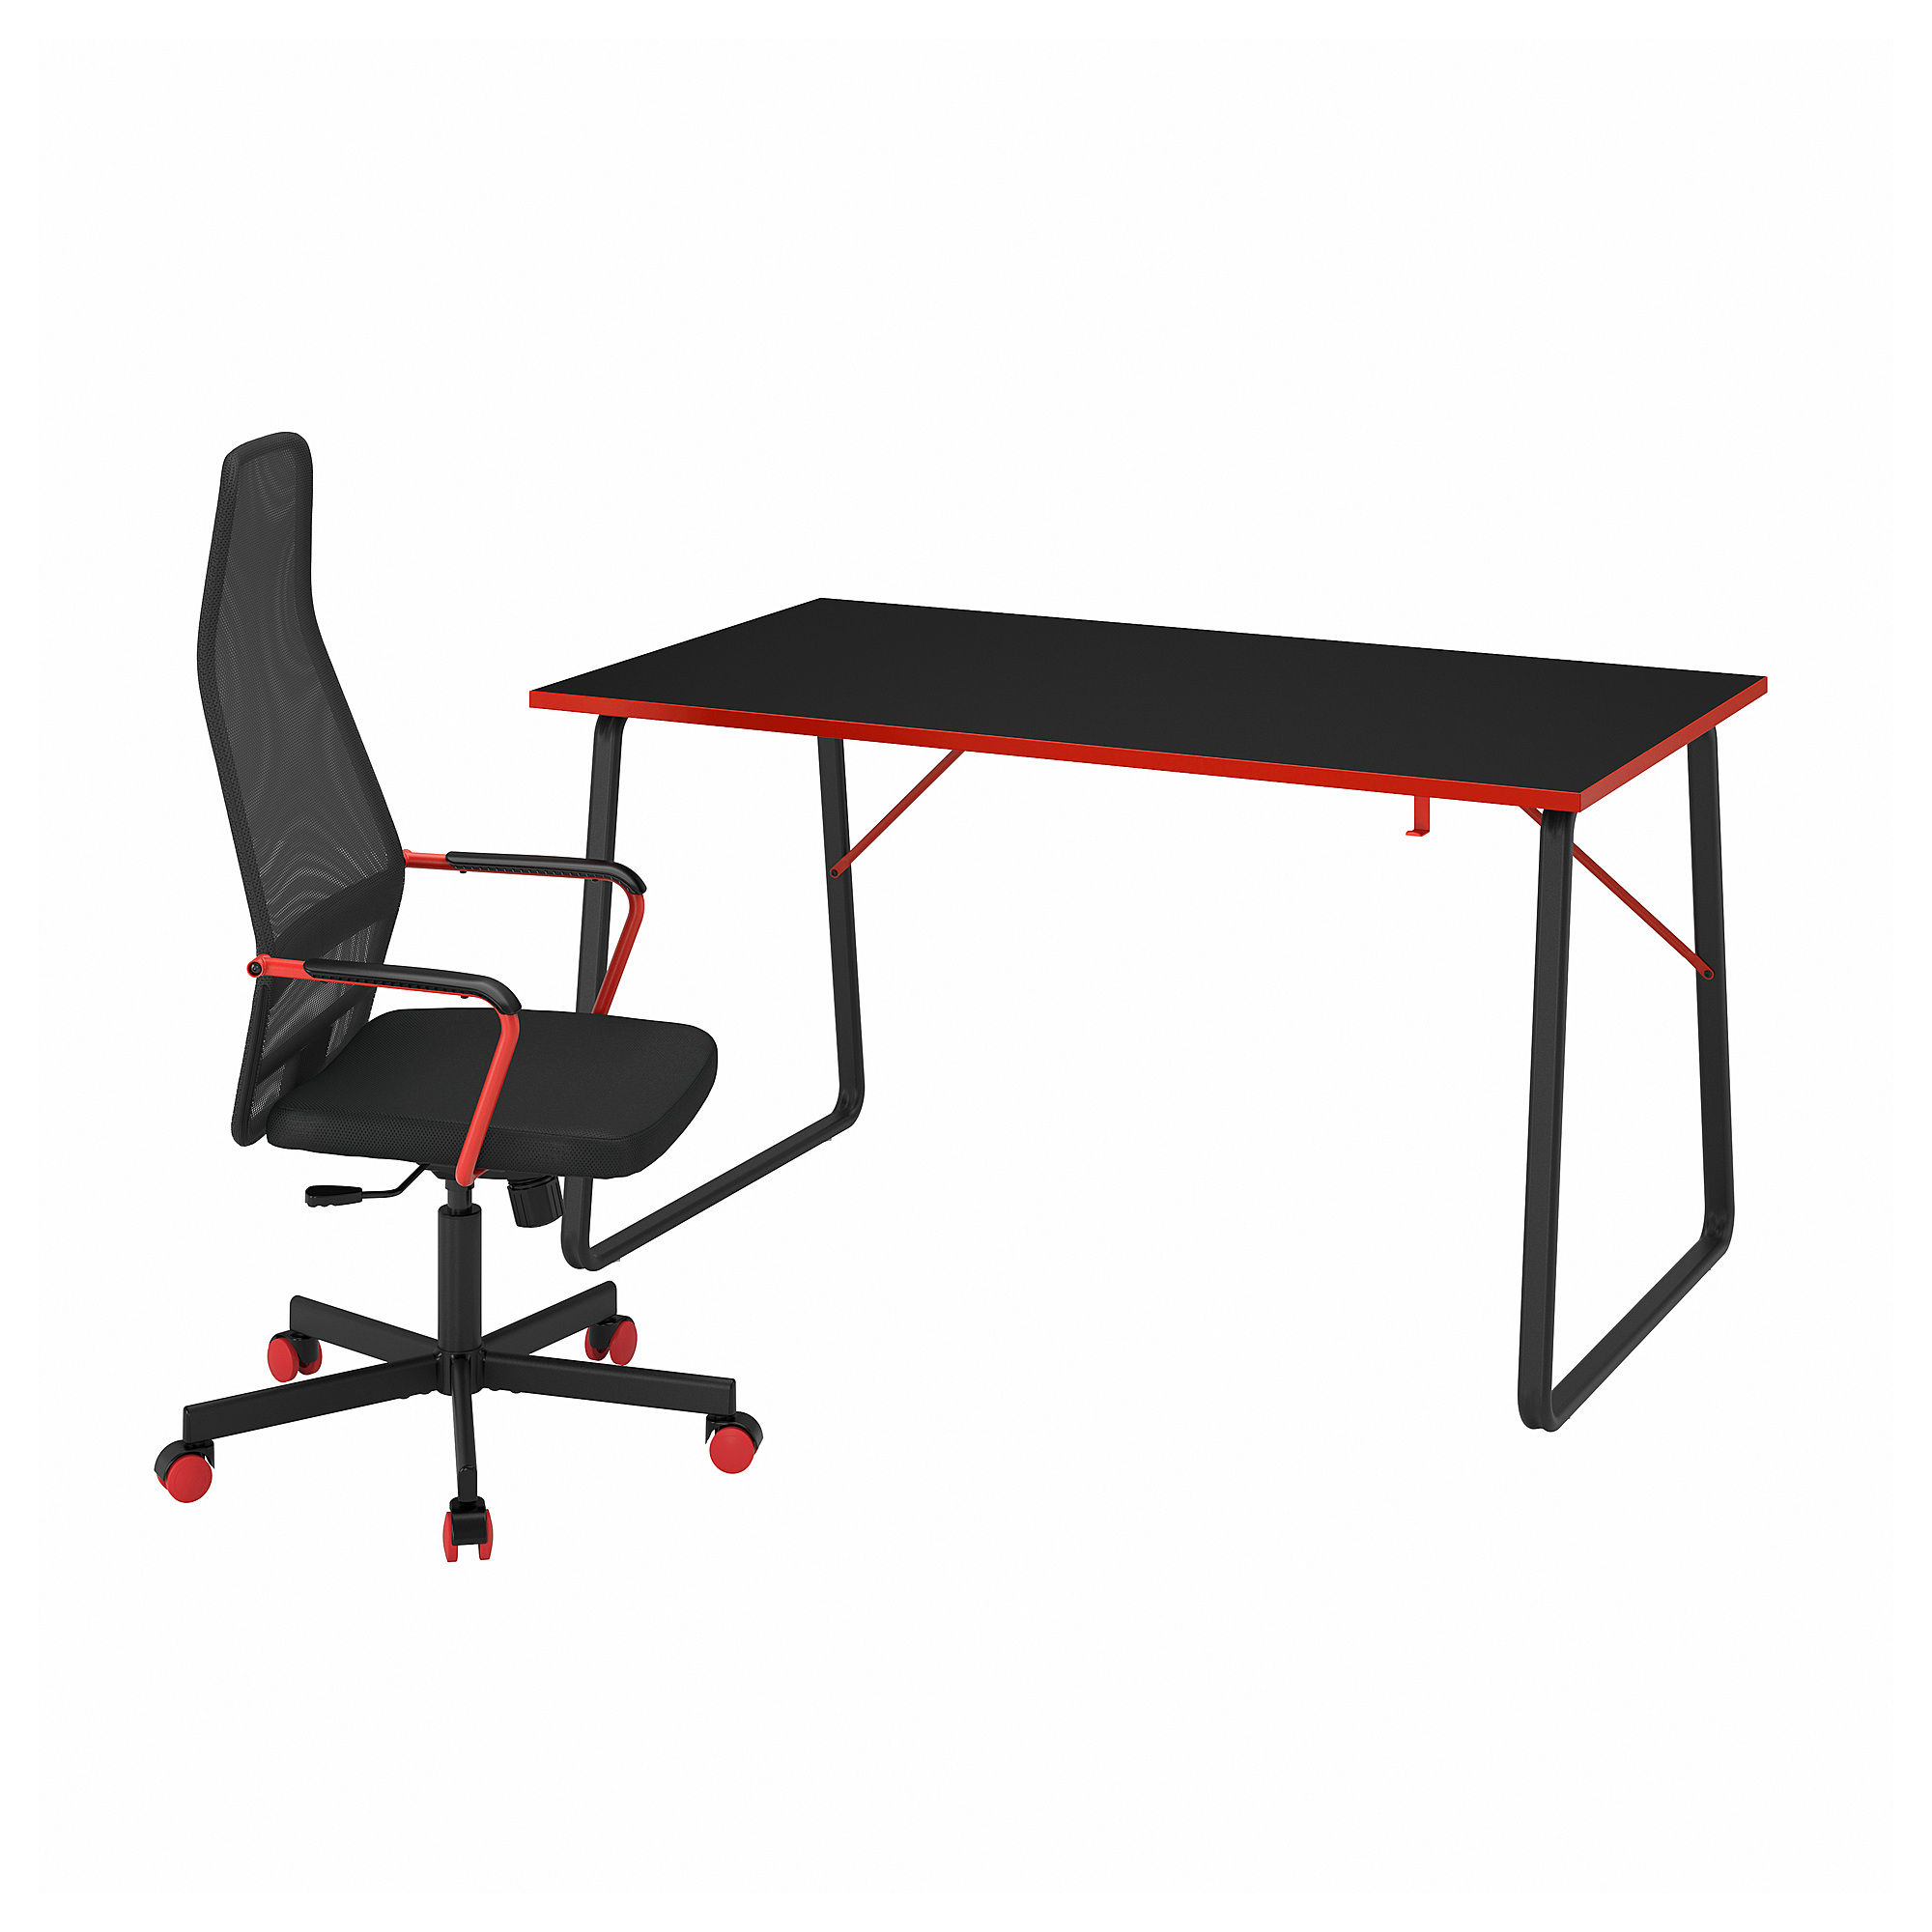 HUVUDSPELARE gaming desk and chair